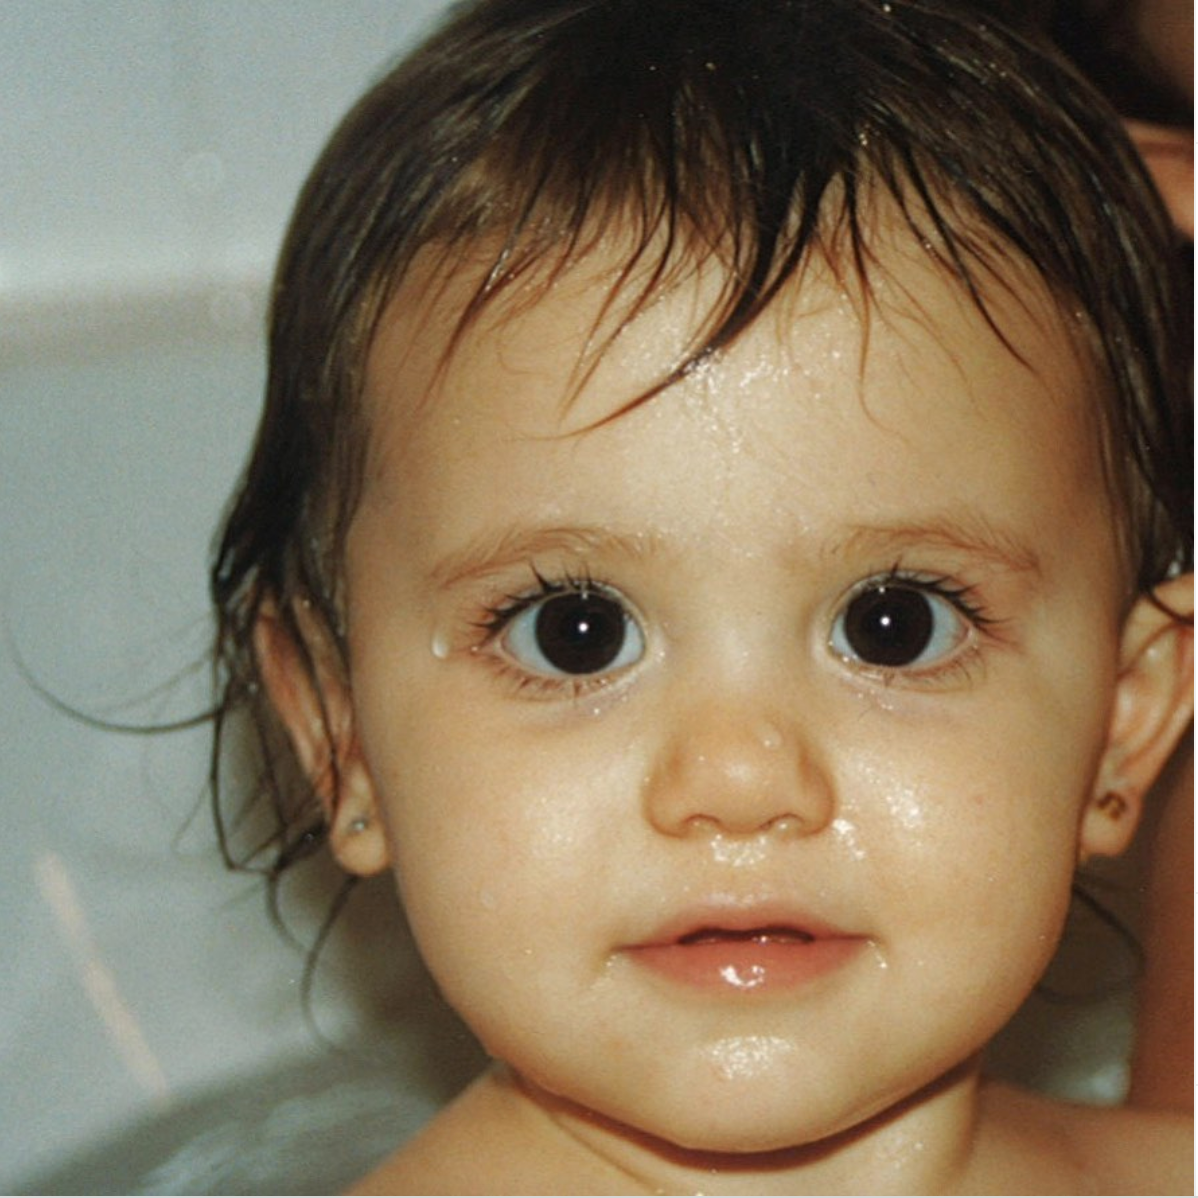 Ariana Grande as a baby